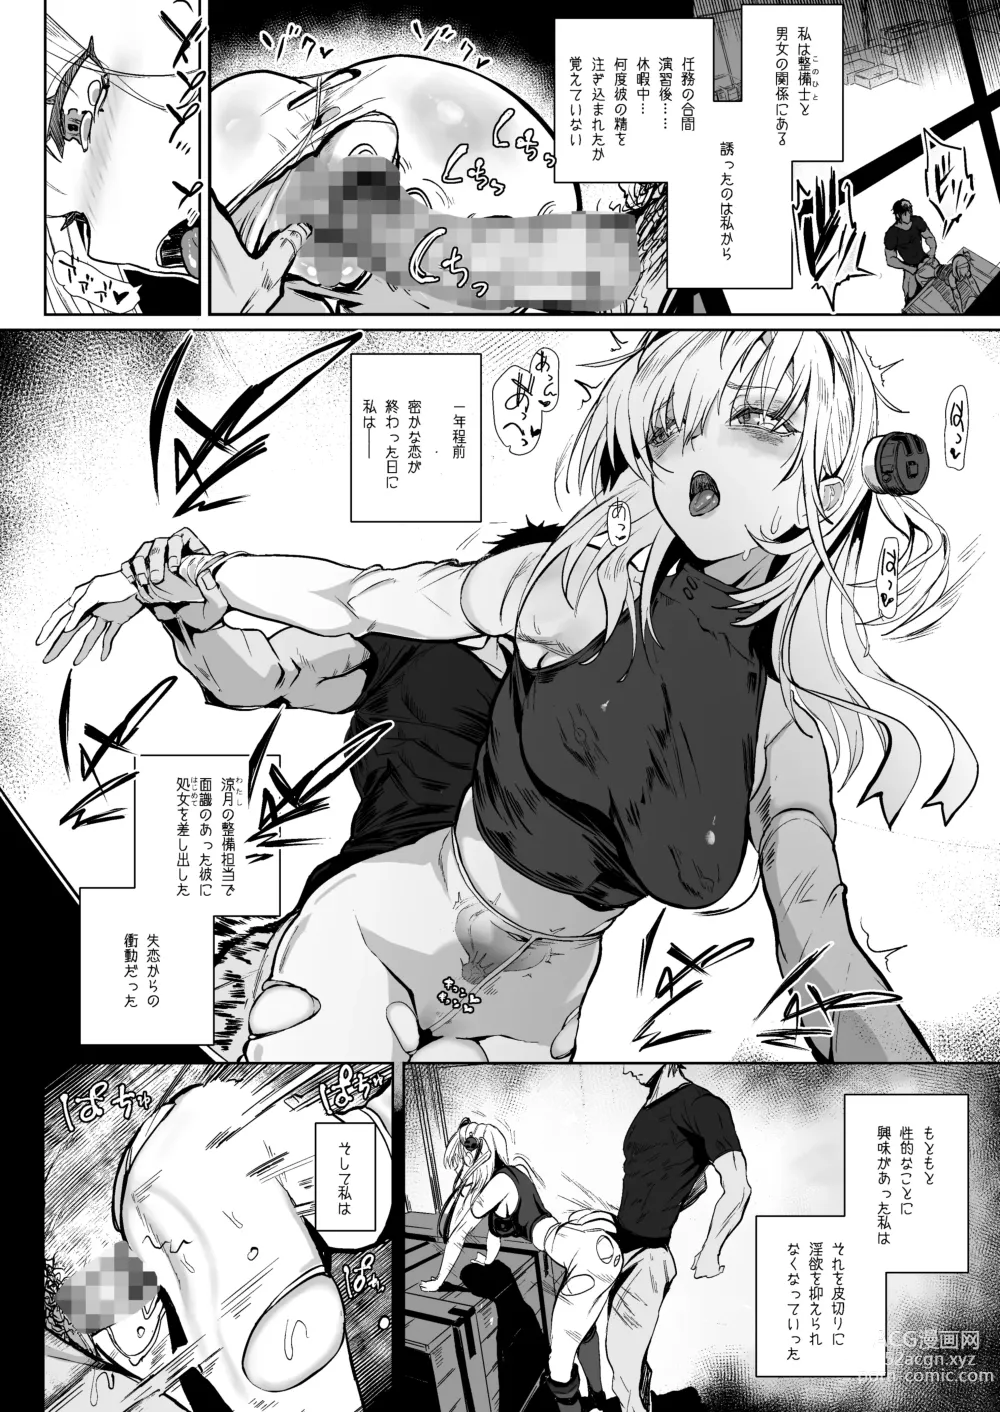 Page 5 of doujinshi SUZUTSUKI END ROLL